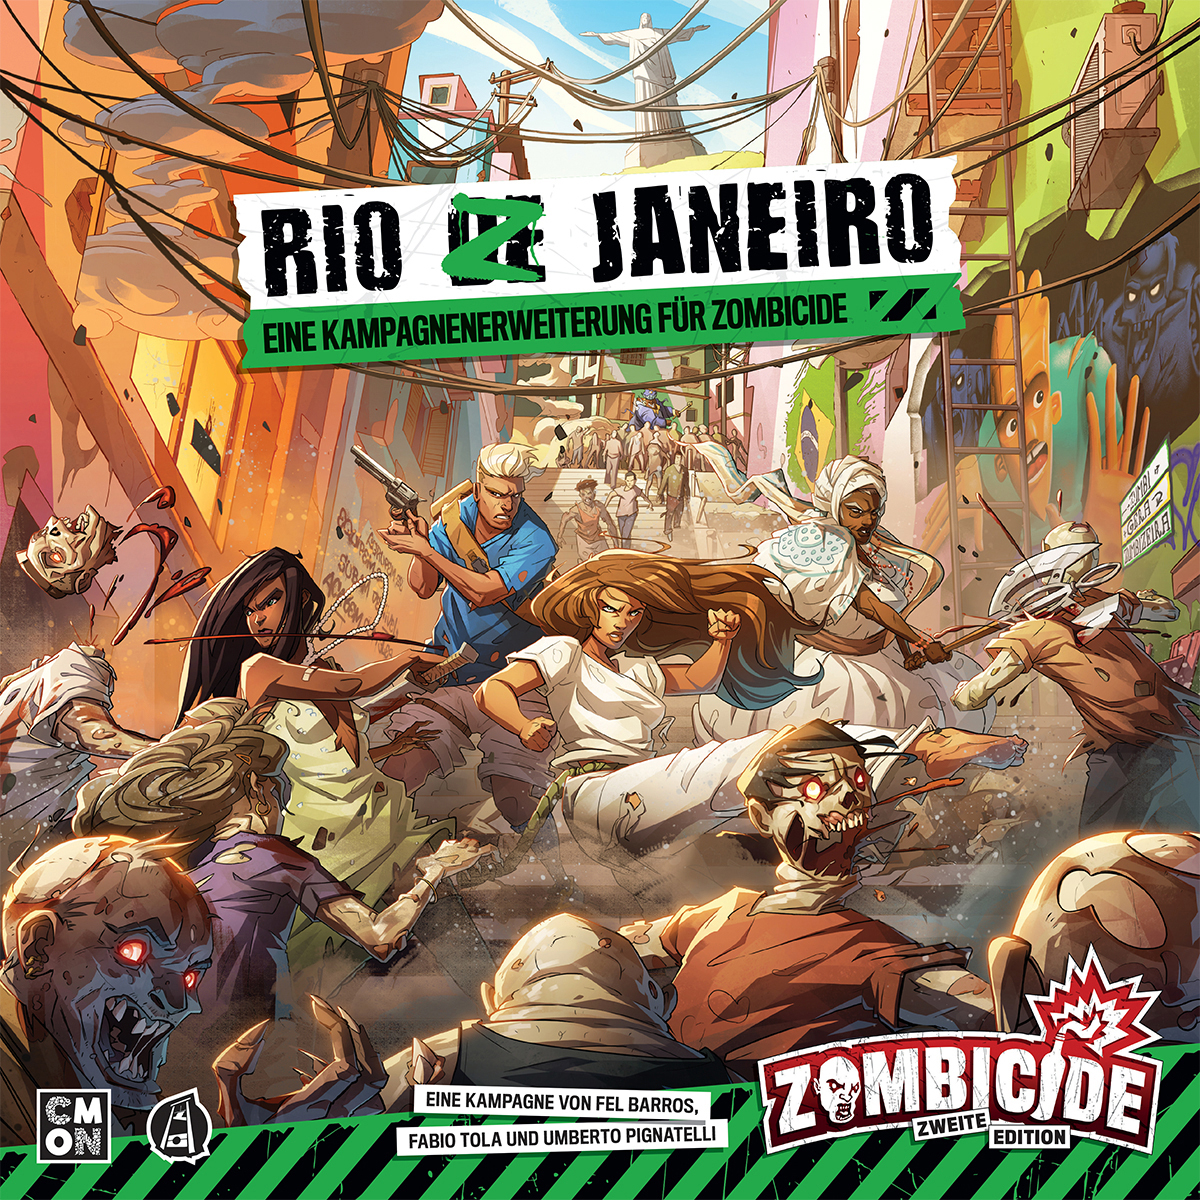 CMON Zombicide Mehrfarbig Edition Rio Z Janeiro - 2. Brettspiel